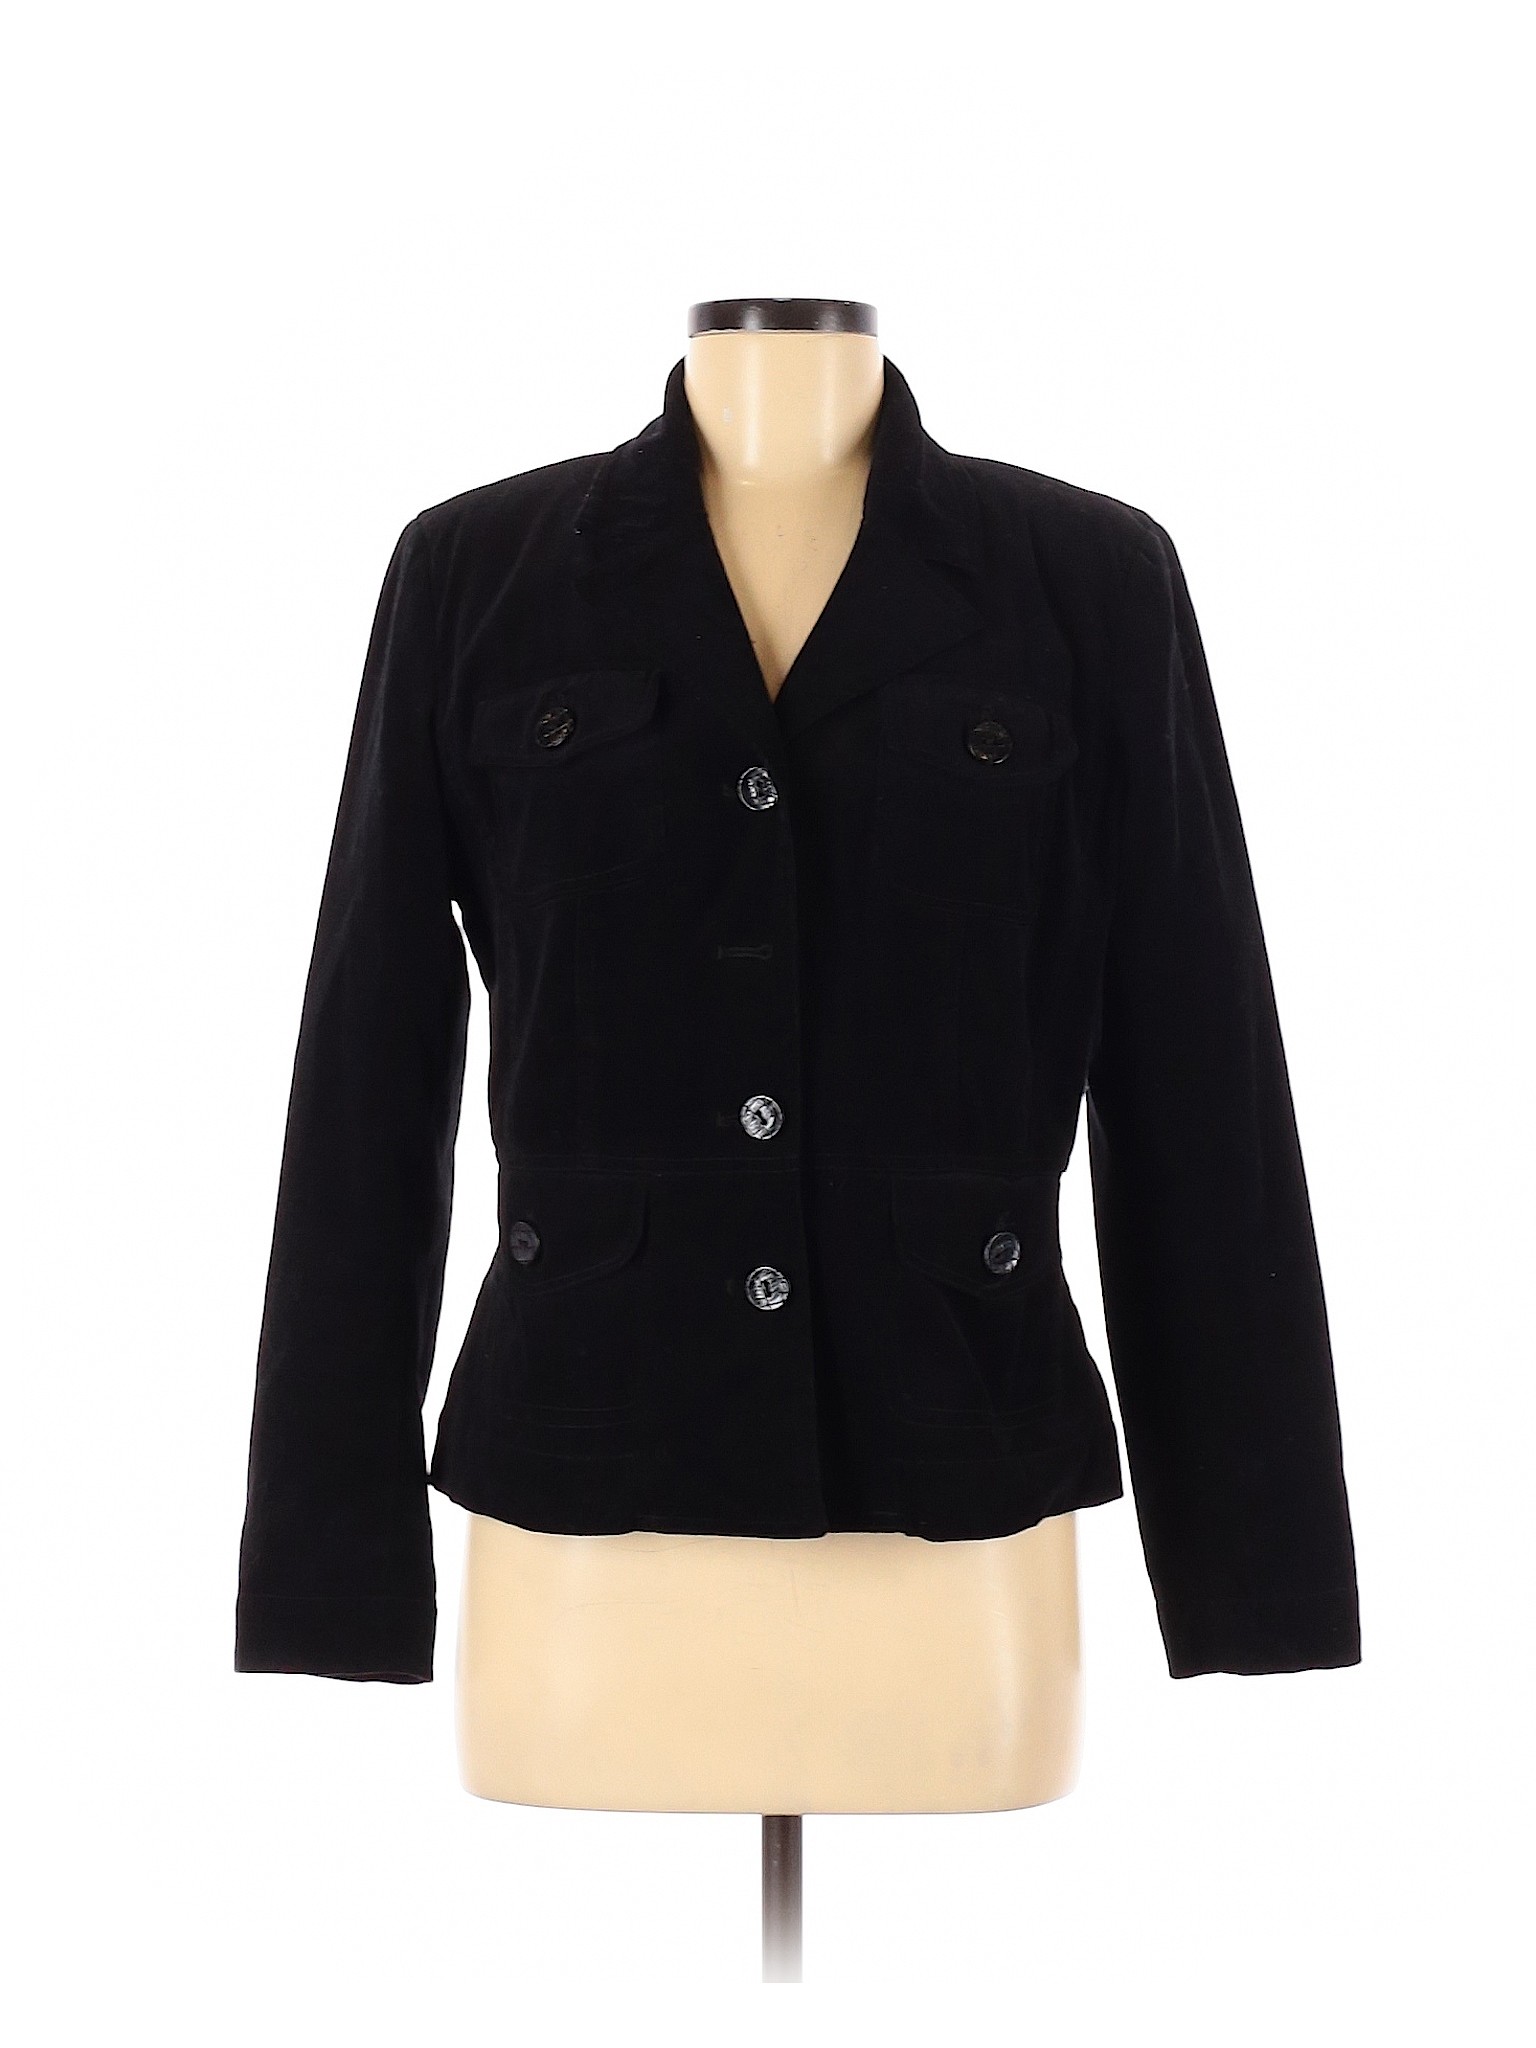 Merona Women Black Jacket M | eBay